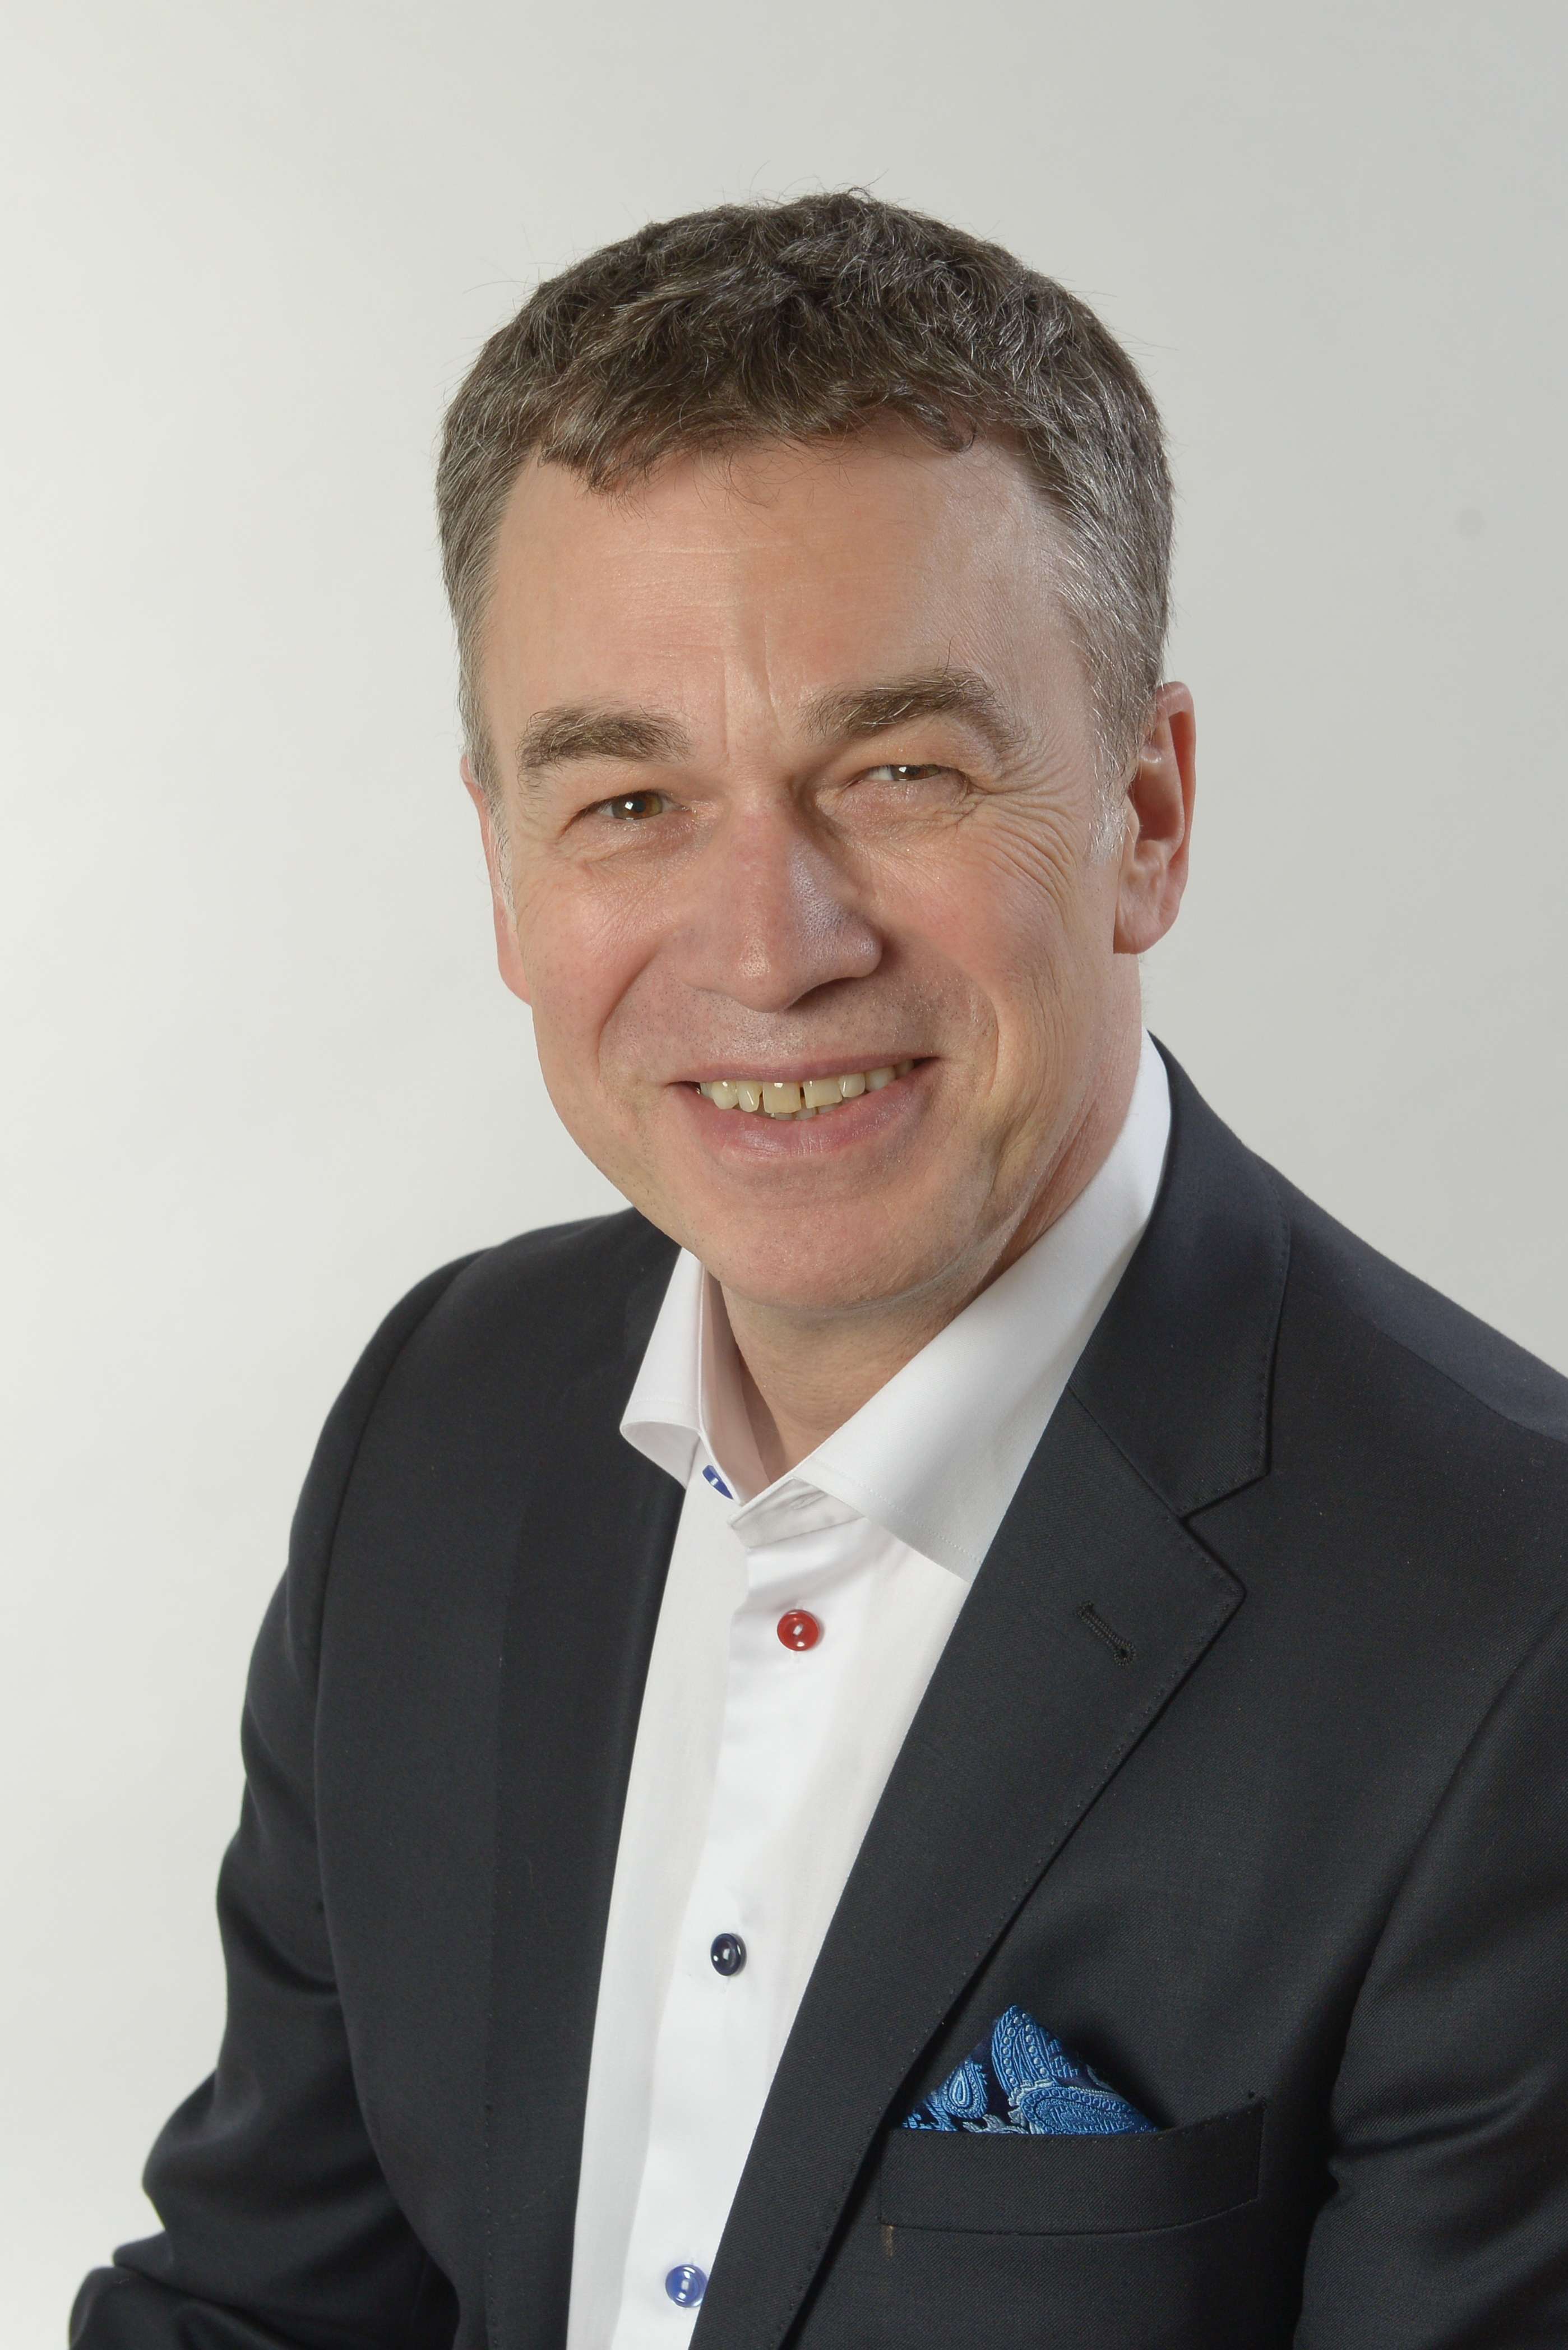 Jakob Hess, managing director